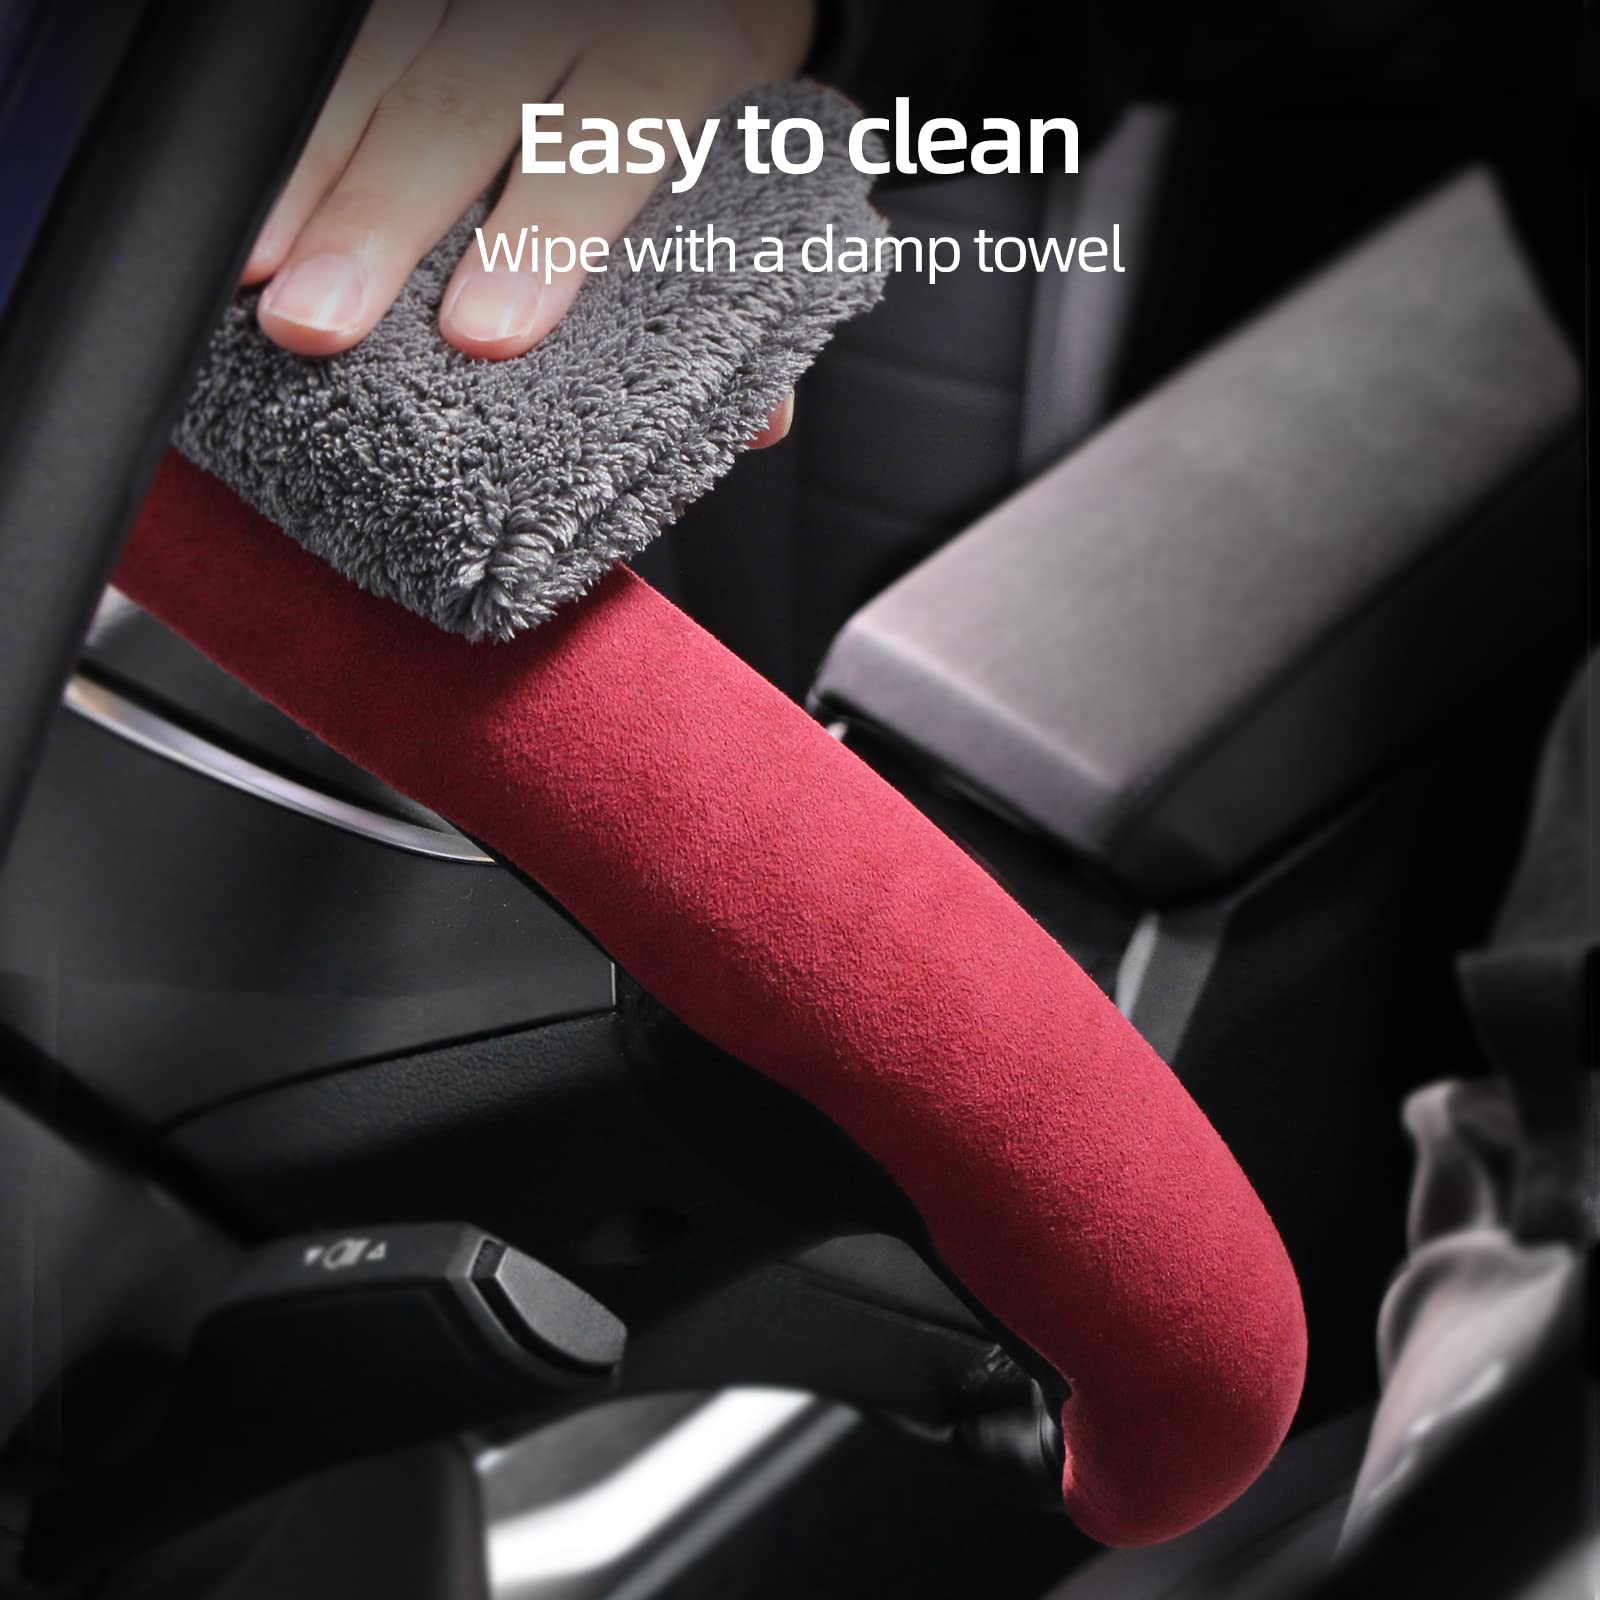 Steering Wheel Cover,Alcantara Leather Steering Wheel Grip,Fit 99% Car Wheel Protect Accessories (Red)